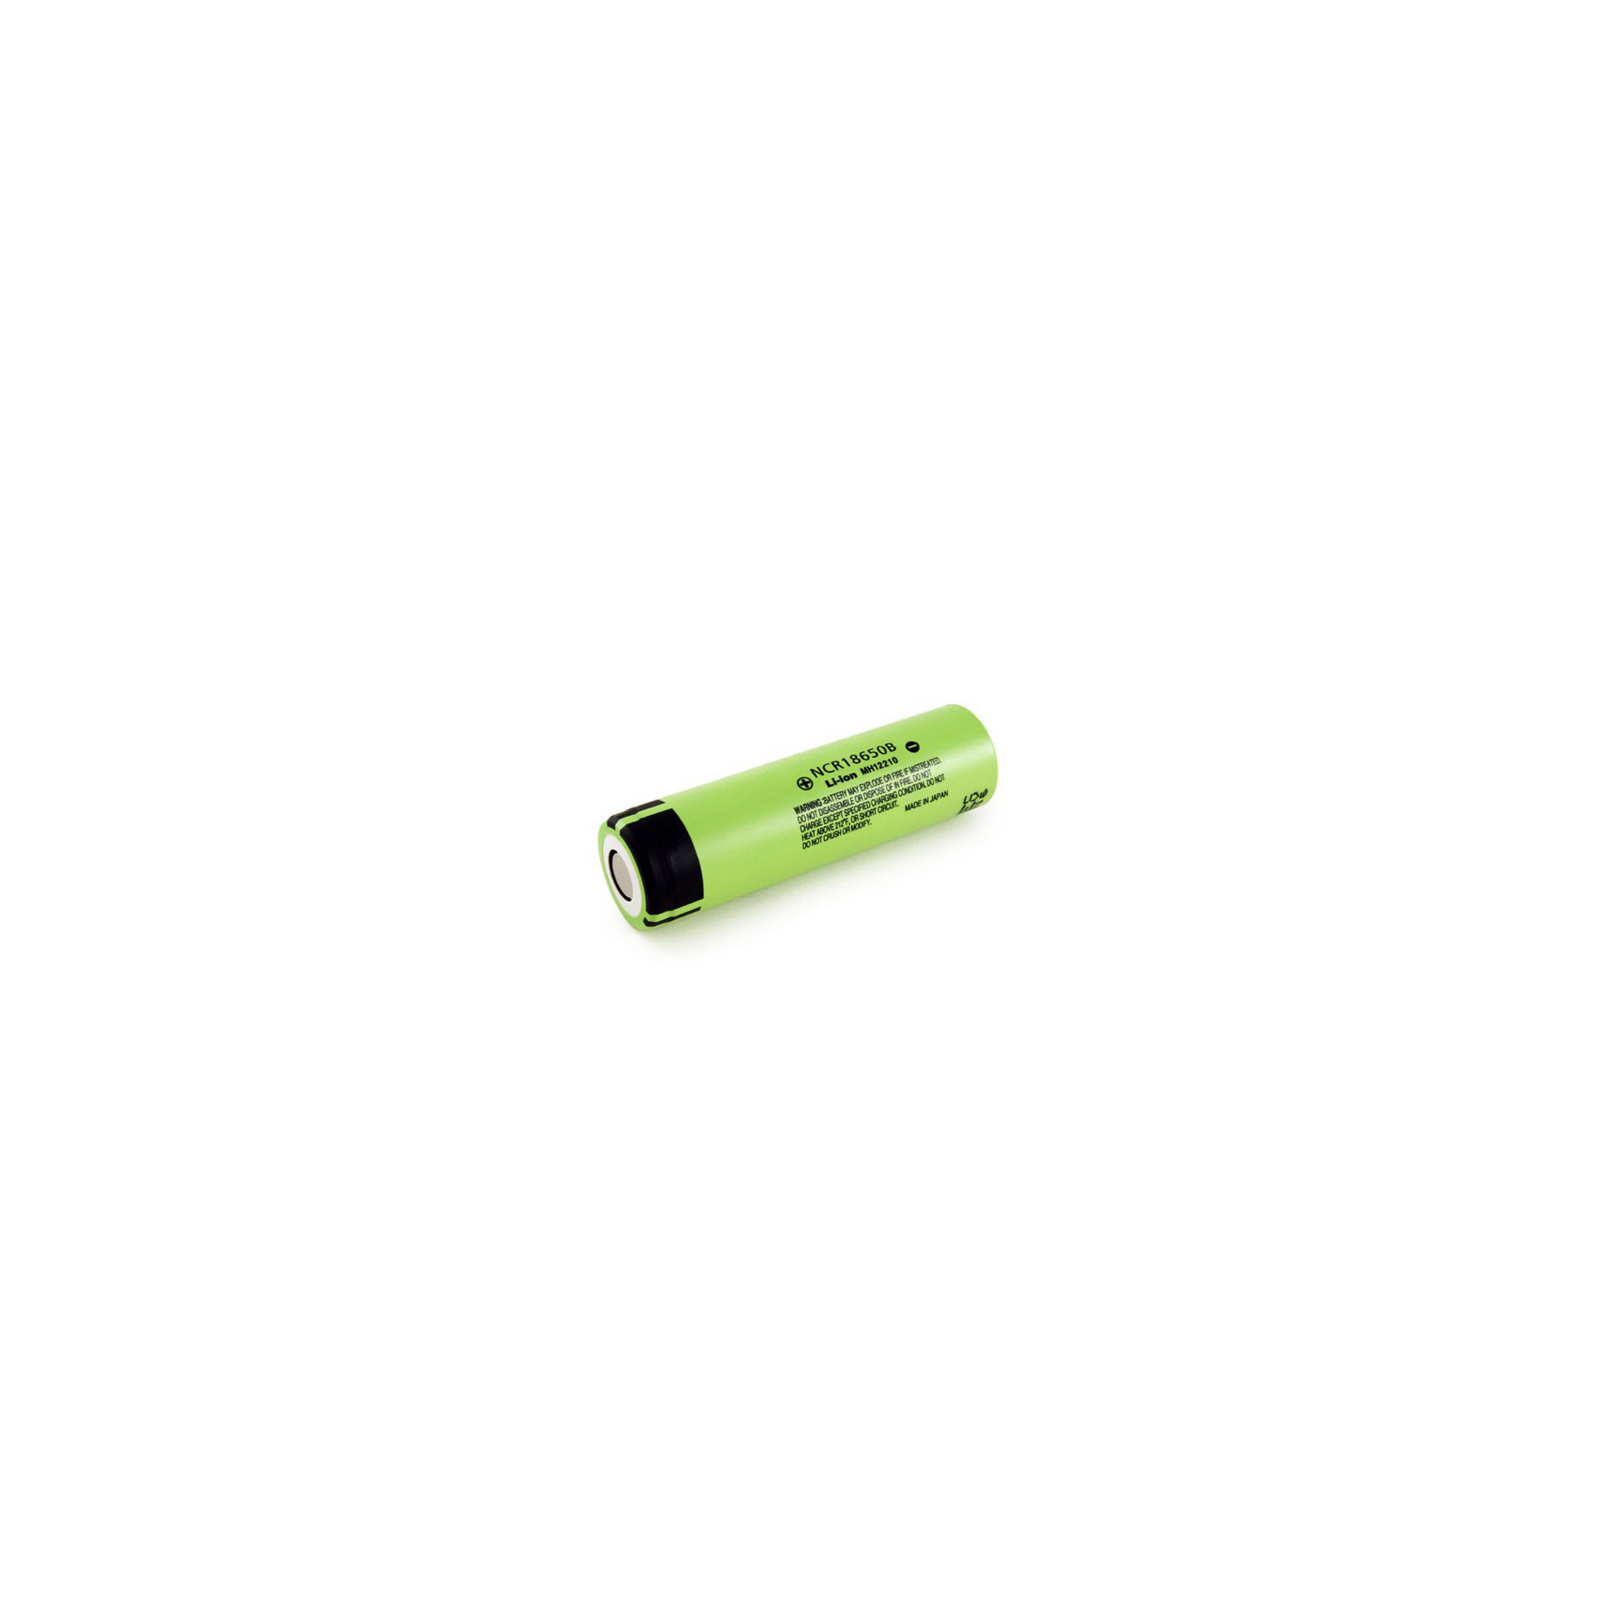 Аккумулятор 18650 Li-Ion NCR18650B TipTop, 1500mAh, 6.8A, 4.2/3.6/2.5V, green, OEM Panasonic (NCR18650B / 23970)